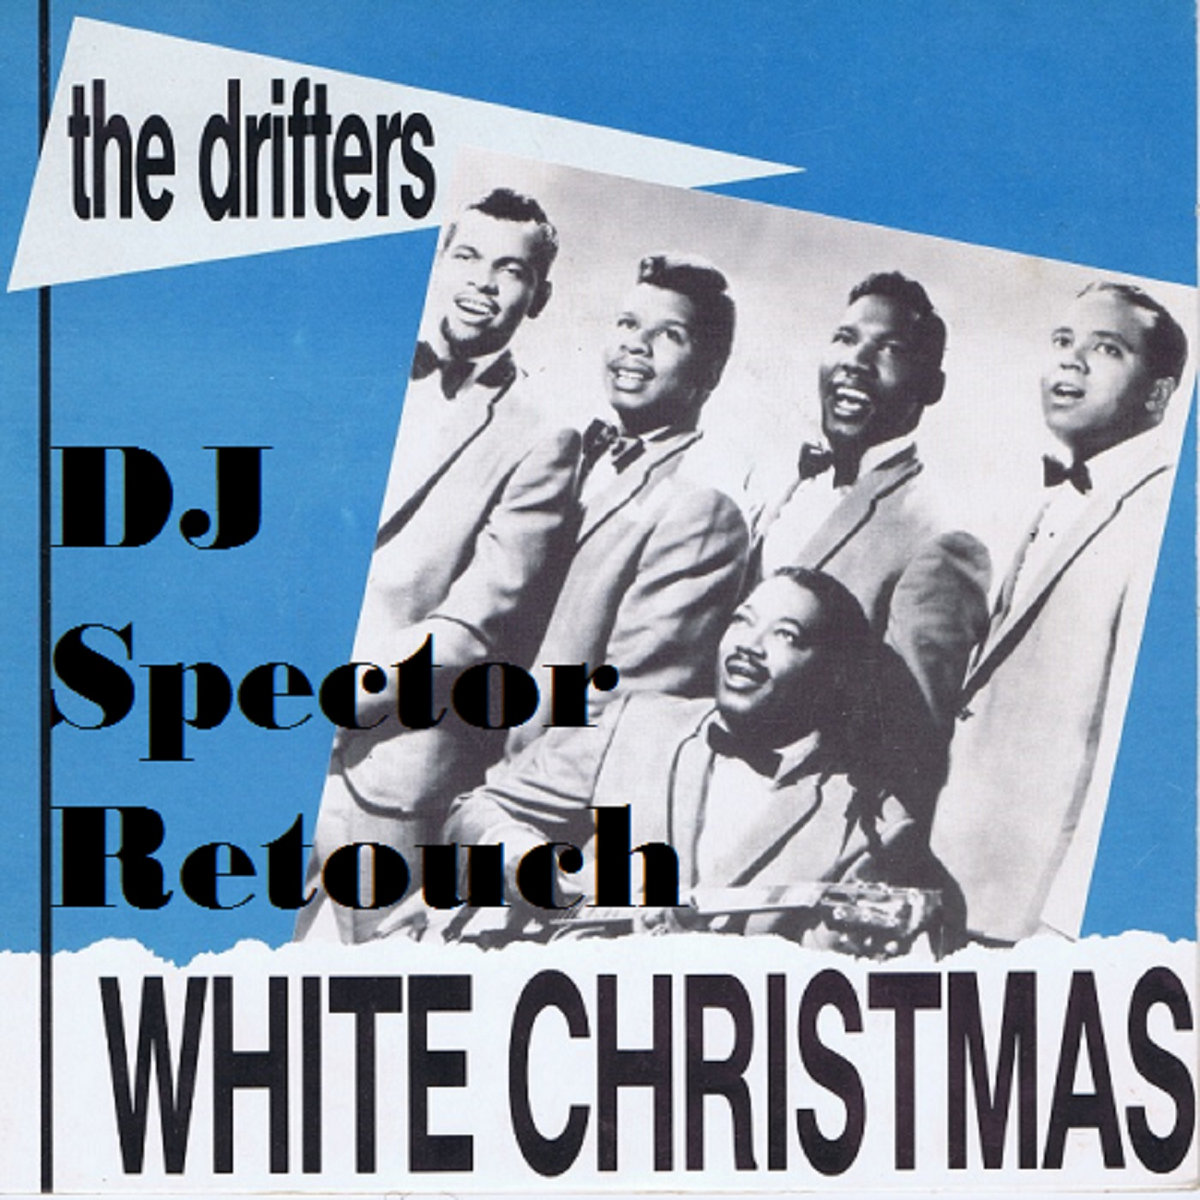 The Drifters - White Christmas (DJ Spector Retouch) | DJ Spector